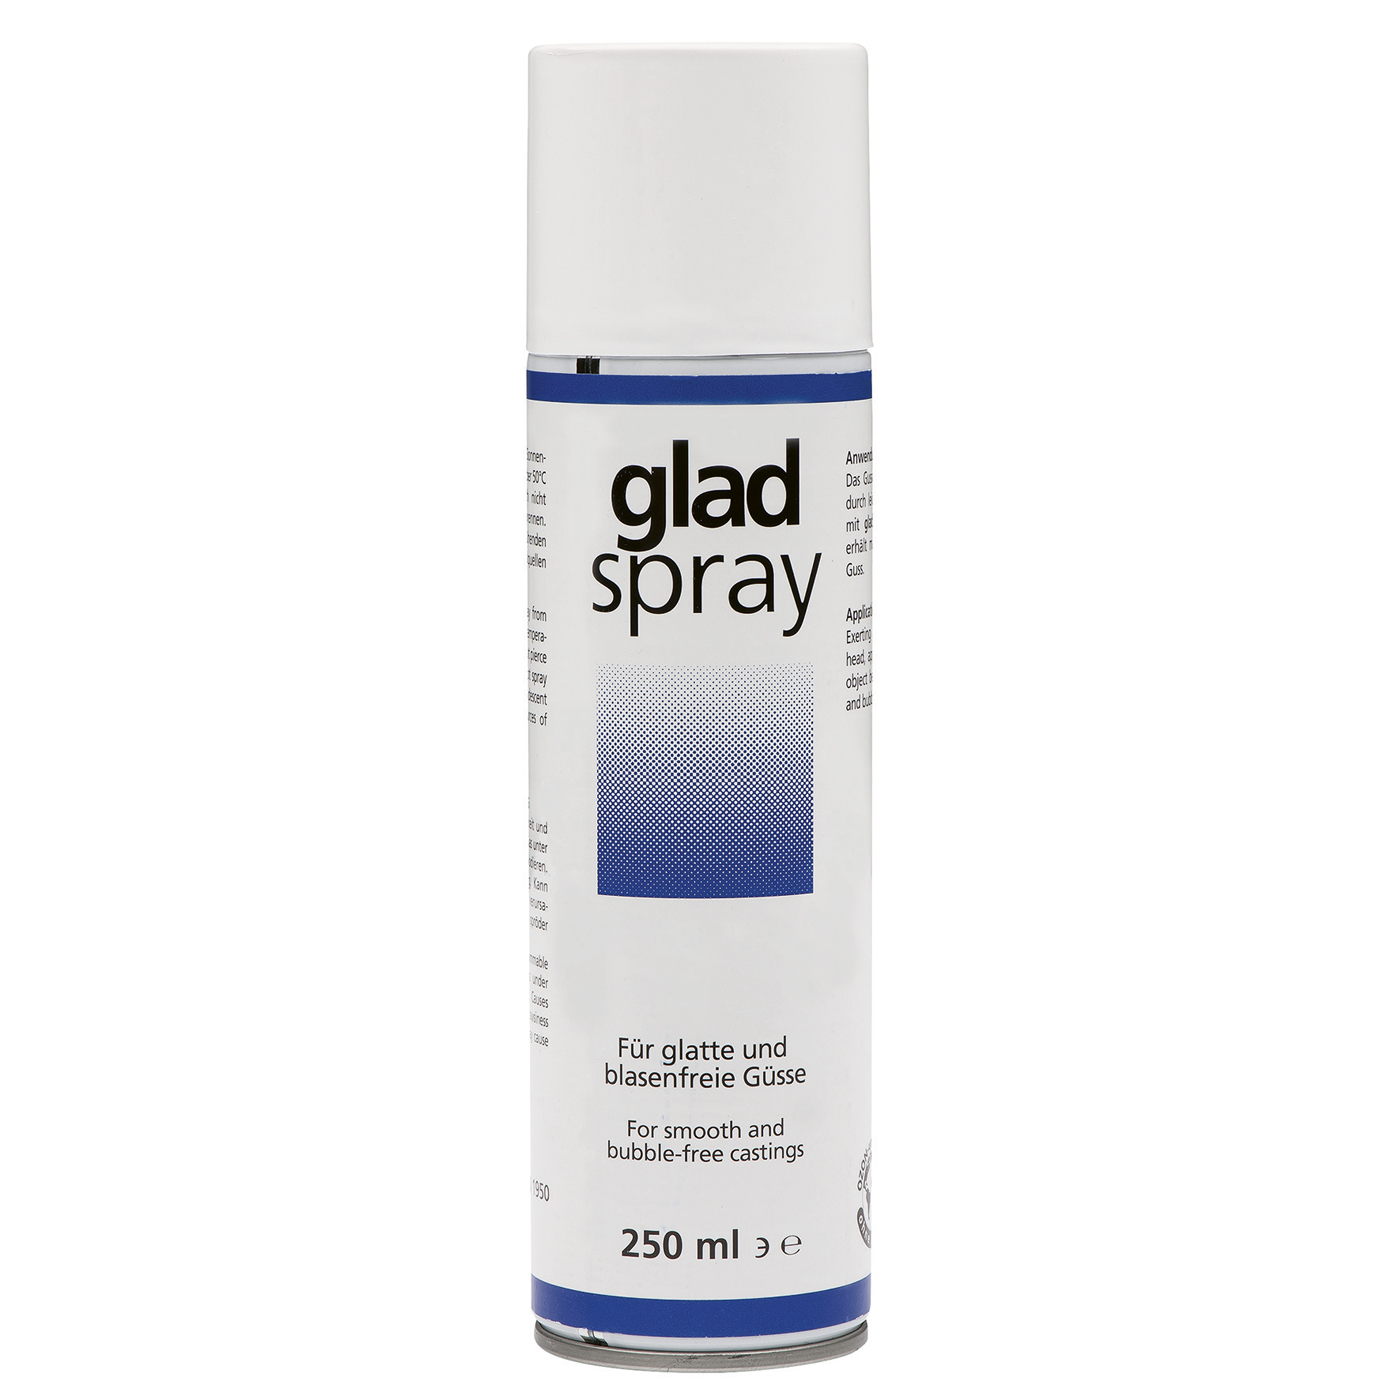 glad-spray Wetting Agent - 250 ml